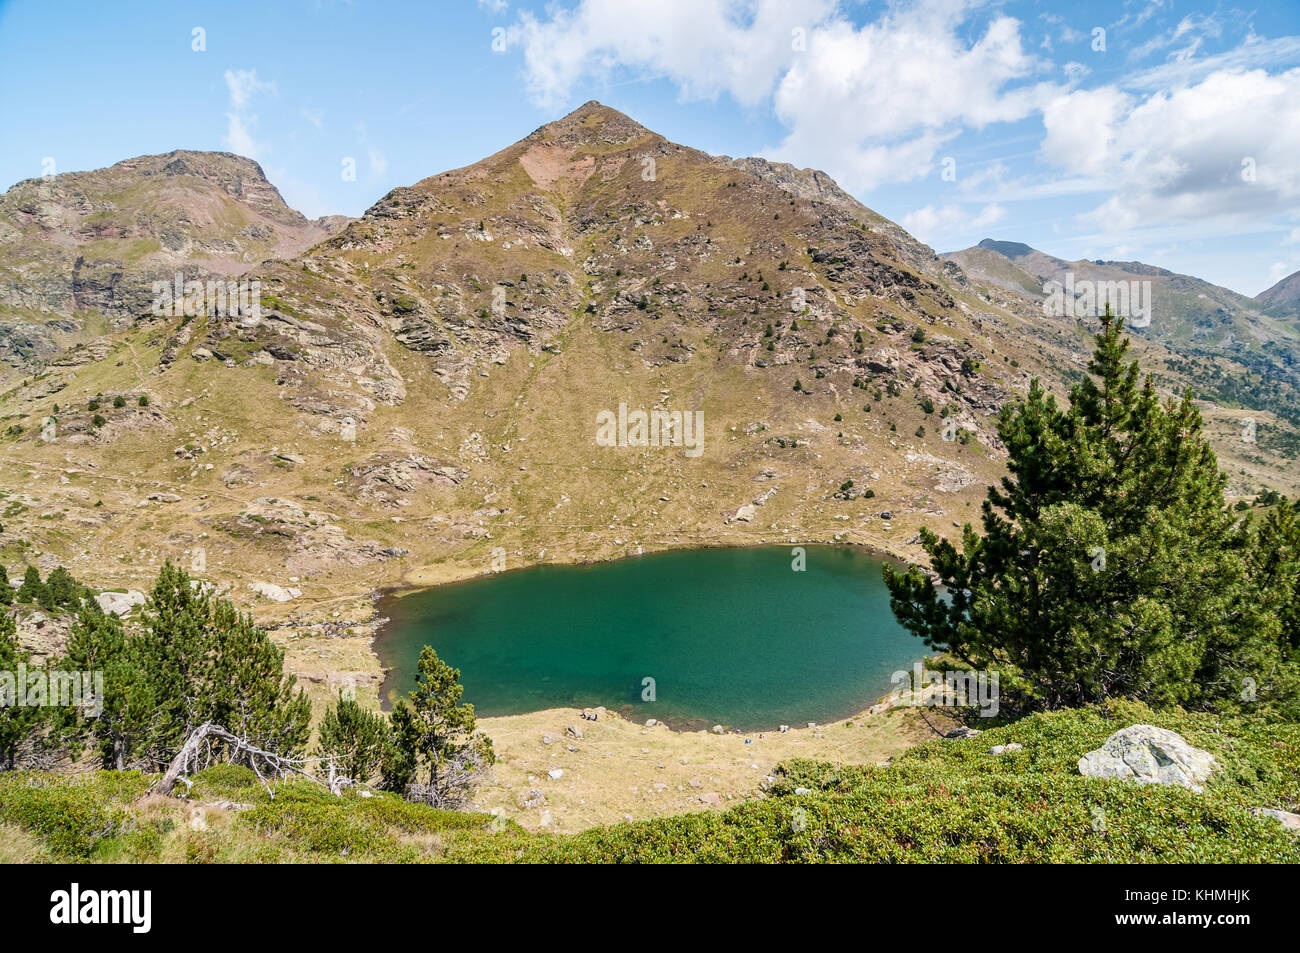 Vista del lago de alta montaña llamada "Estany cebador' cerca de Ordino con mountain pine, Tristaina, Andorra Foto de stock